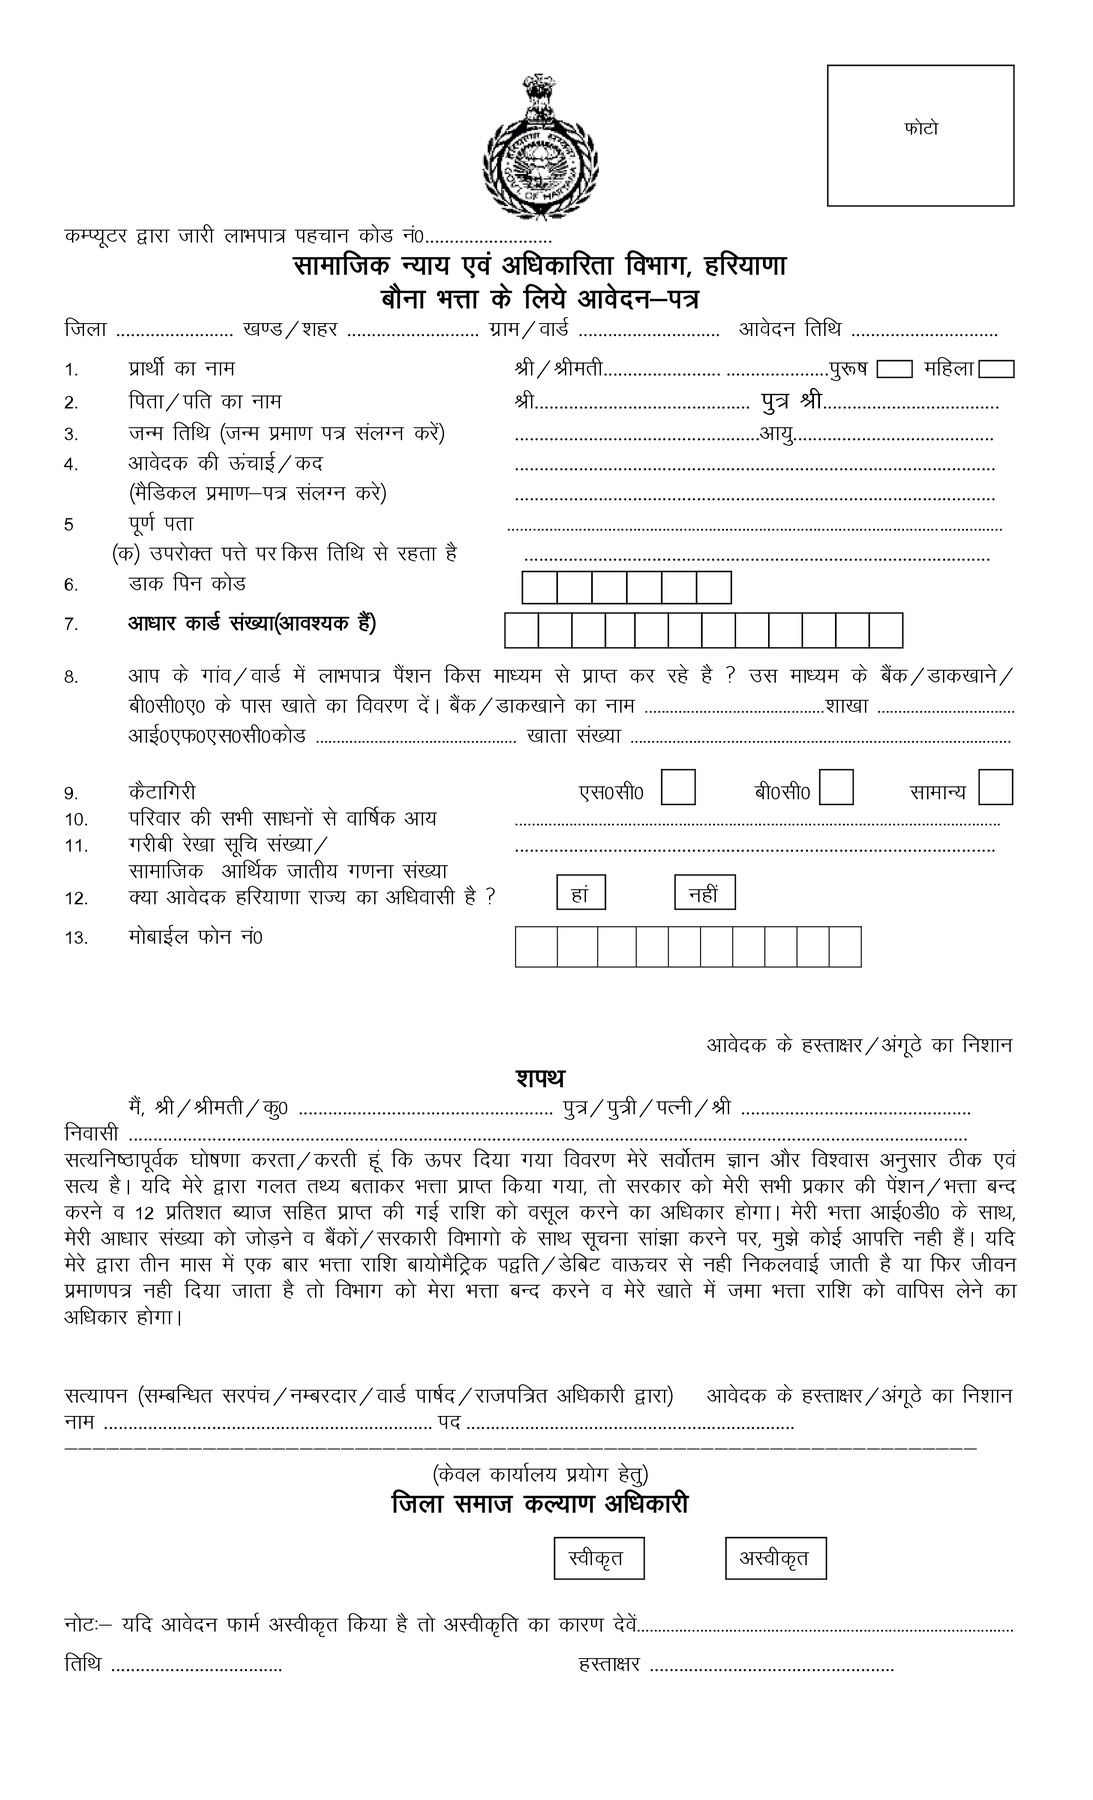 Haryana Dwarf Allowance Application Form PDF